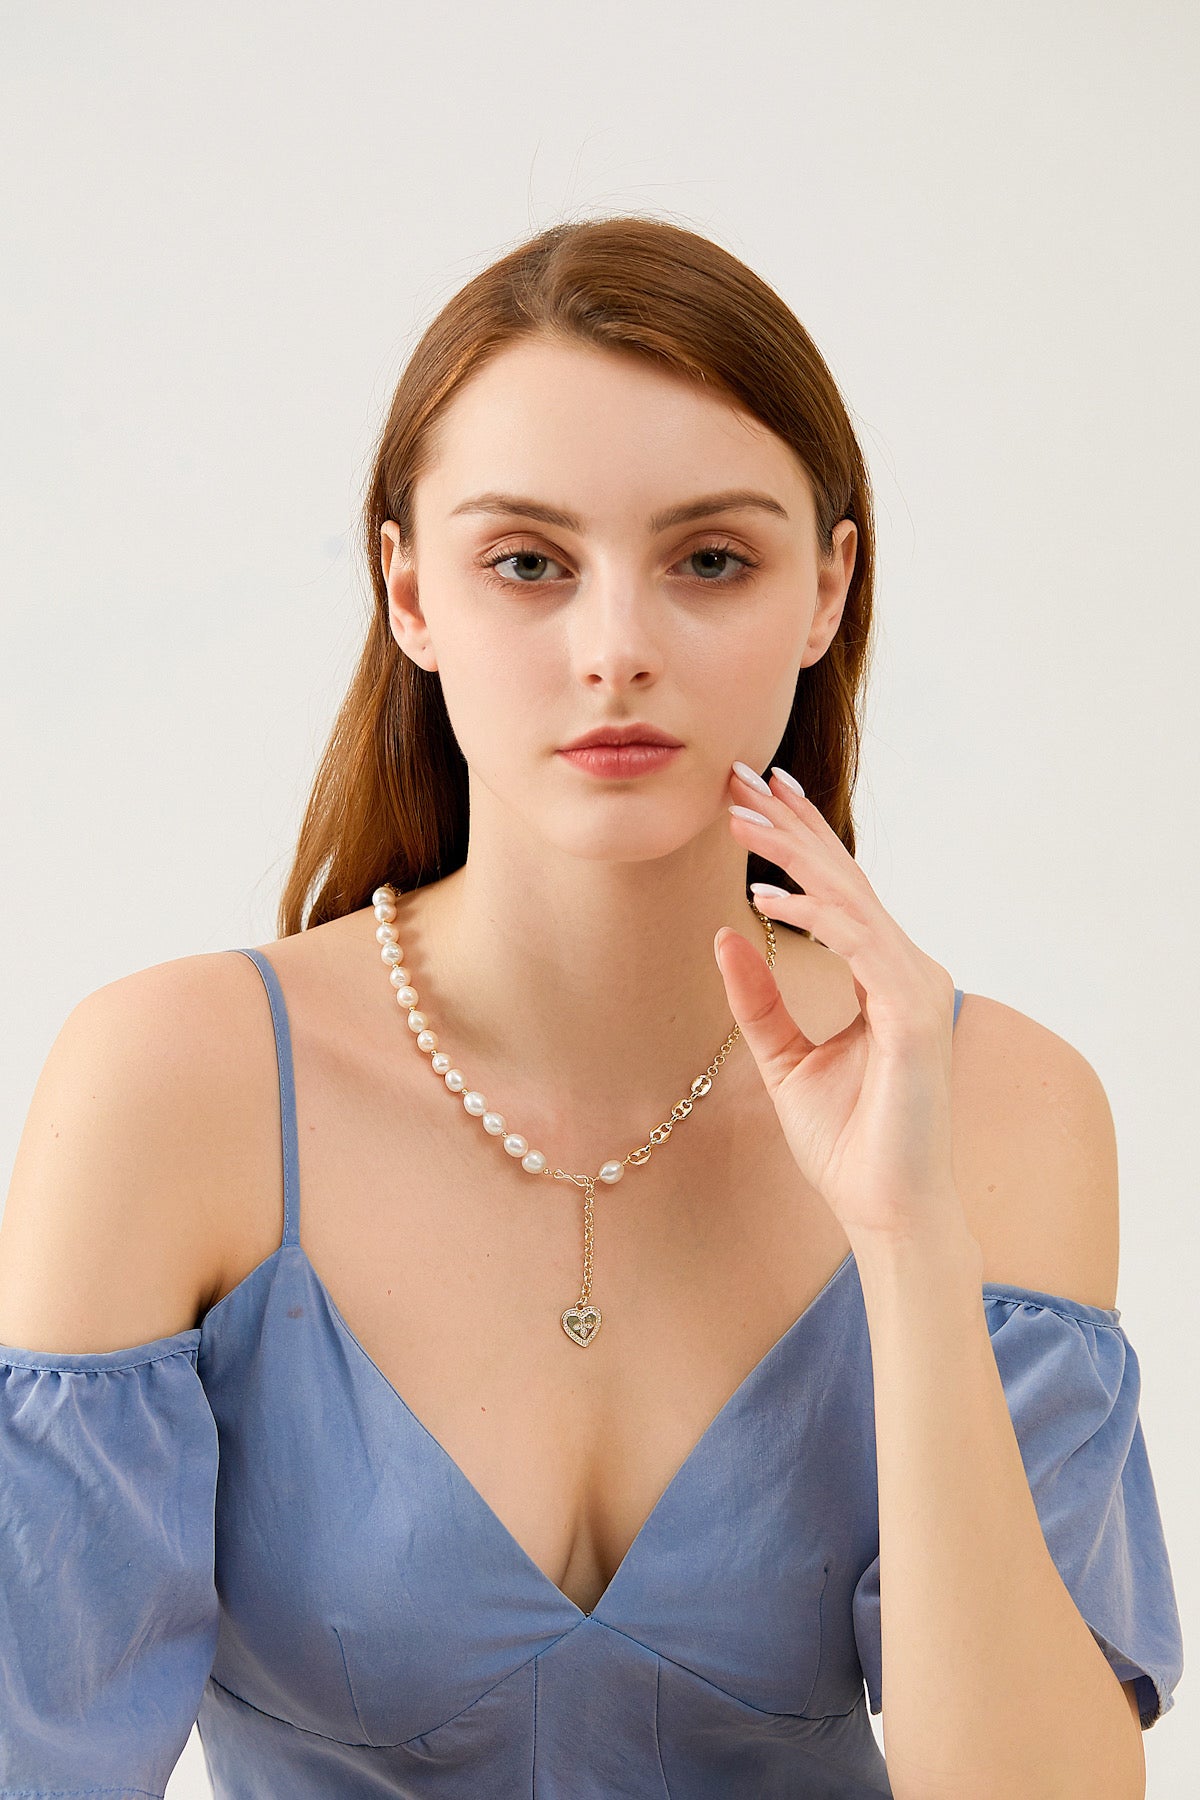 SKYE San Francisco Shop Chic Modern Elegant Classy Women Jewelry French Parisian Minimalist Bellamy Crystal Bee Heart Pendant Pearl Necklace 8